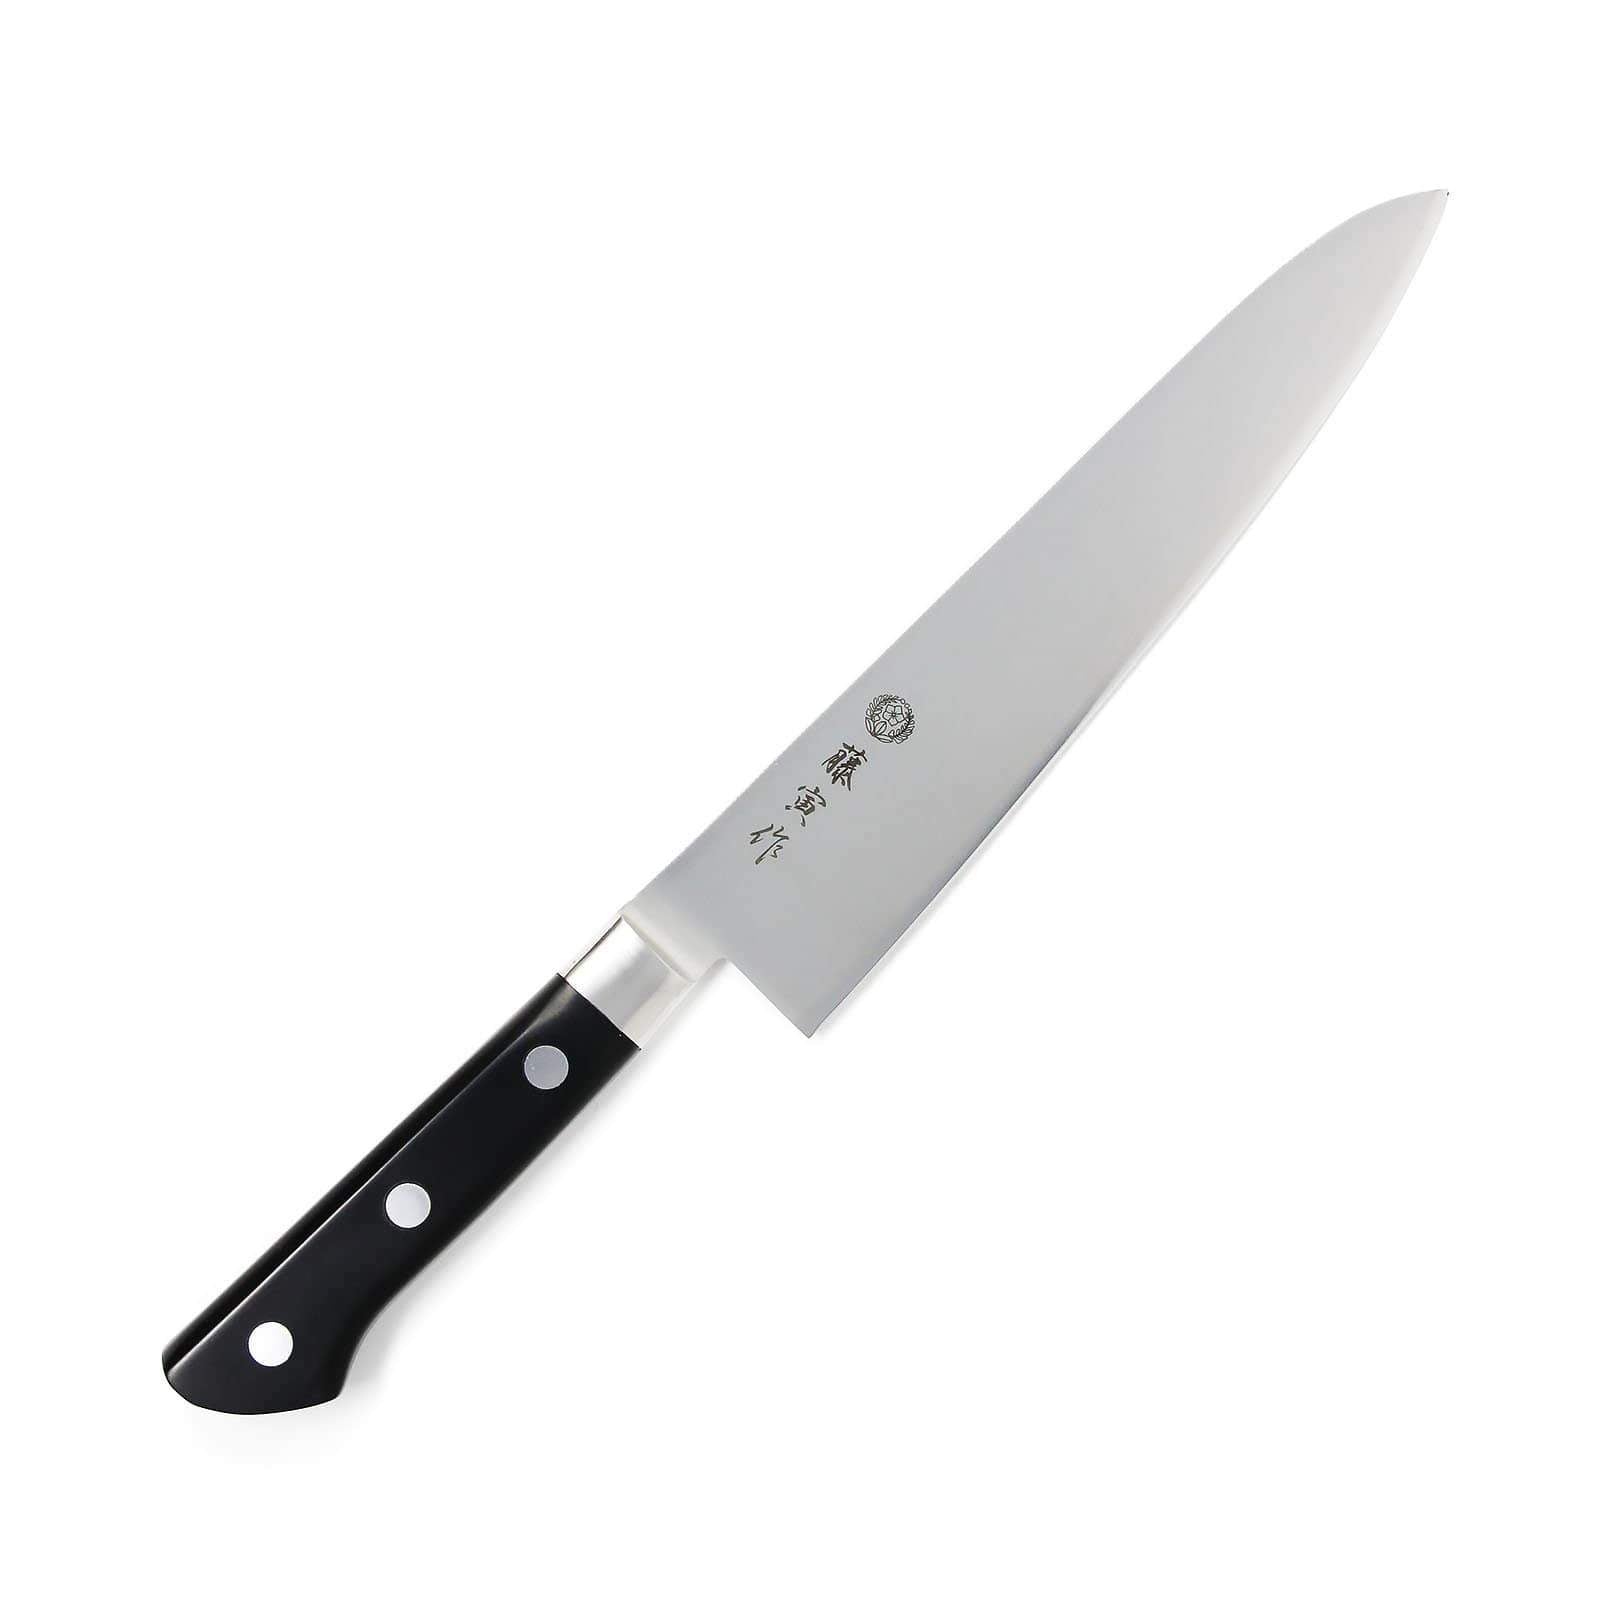 https://cdn.shopify.com/s/files/1/1610/3863/products/tojiro-fujitora-dp-3-layer-gyuto-knife-gyuto-knives-7666956730451_1600x.jpg?v=1563996422